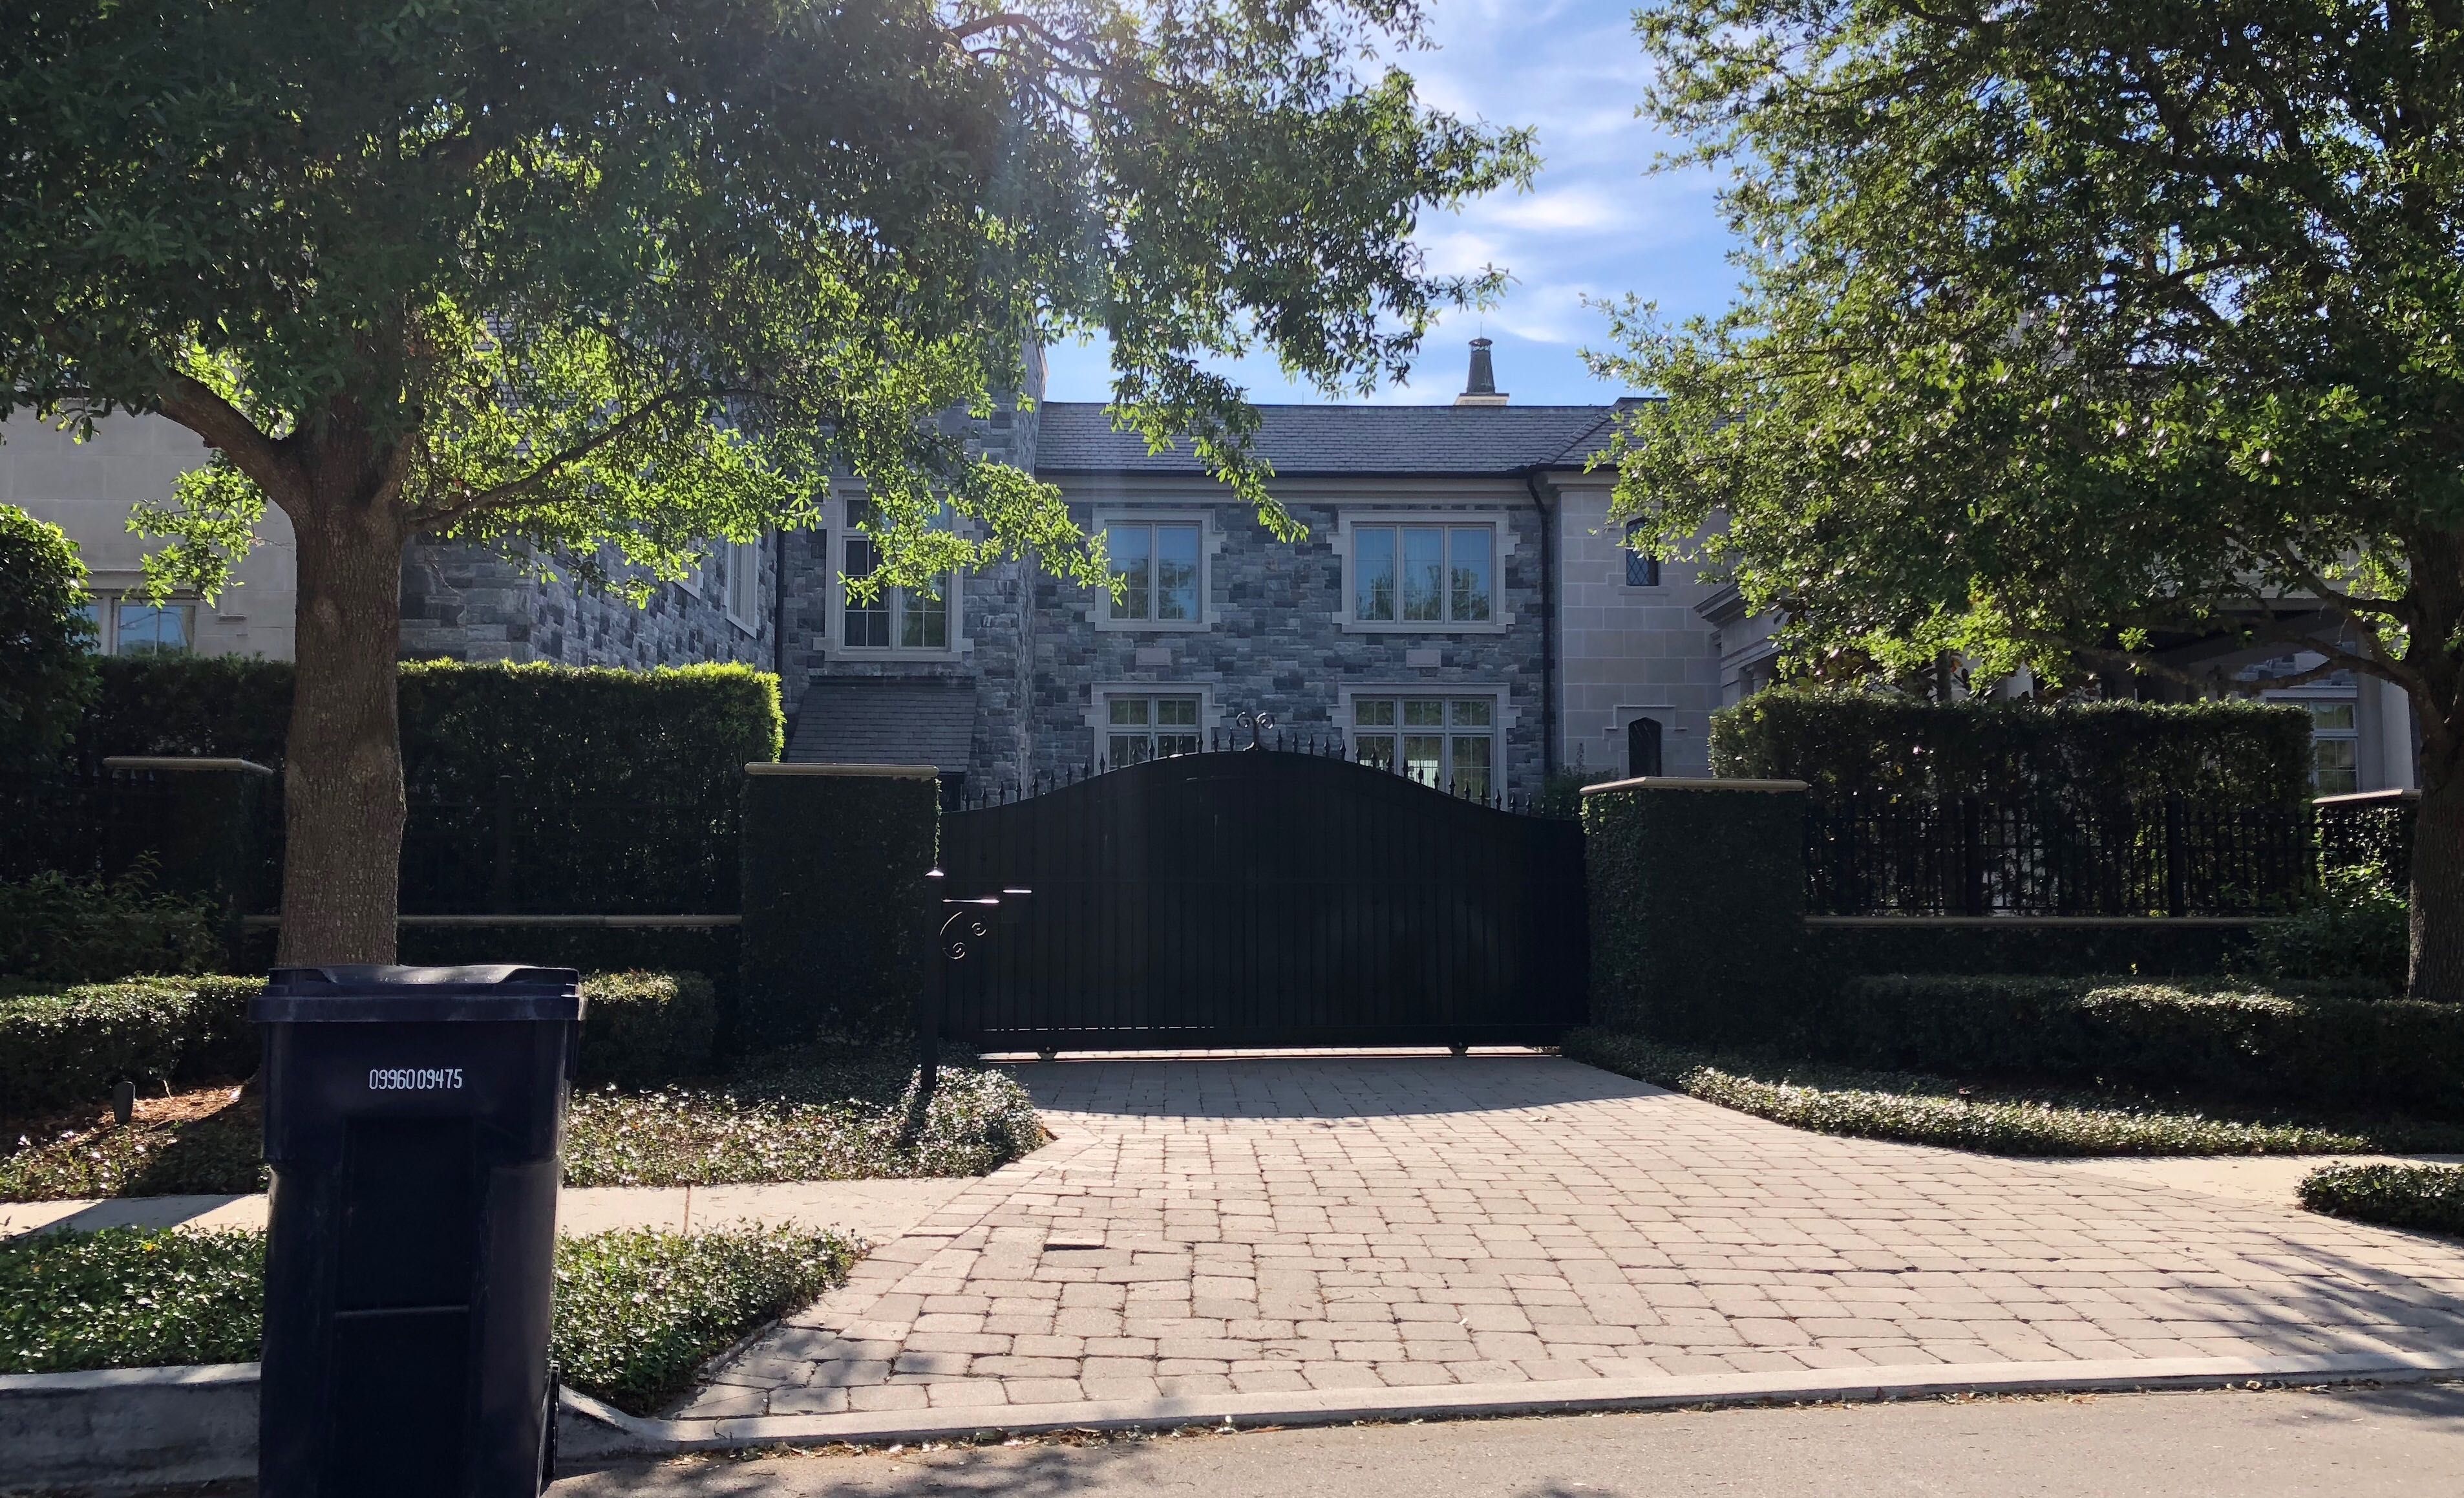 Tom Brady Rents Derek Jeter's Sprawling Tampa Bay Mansion